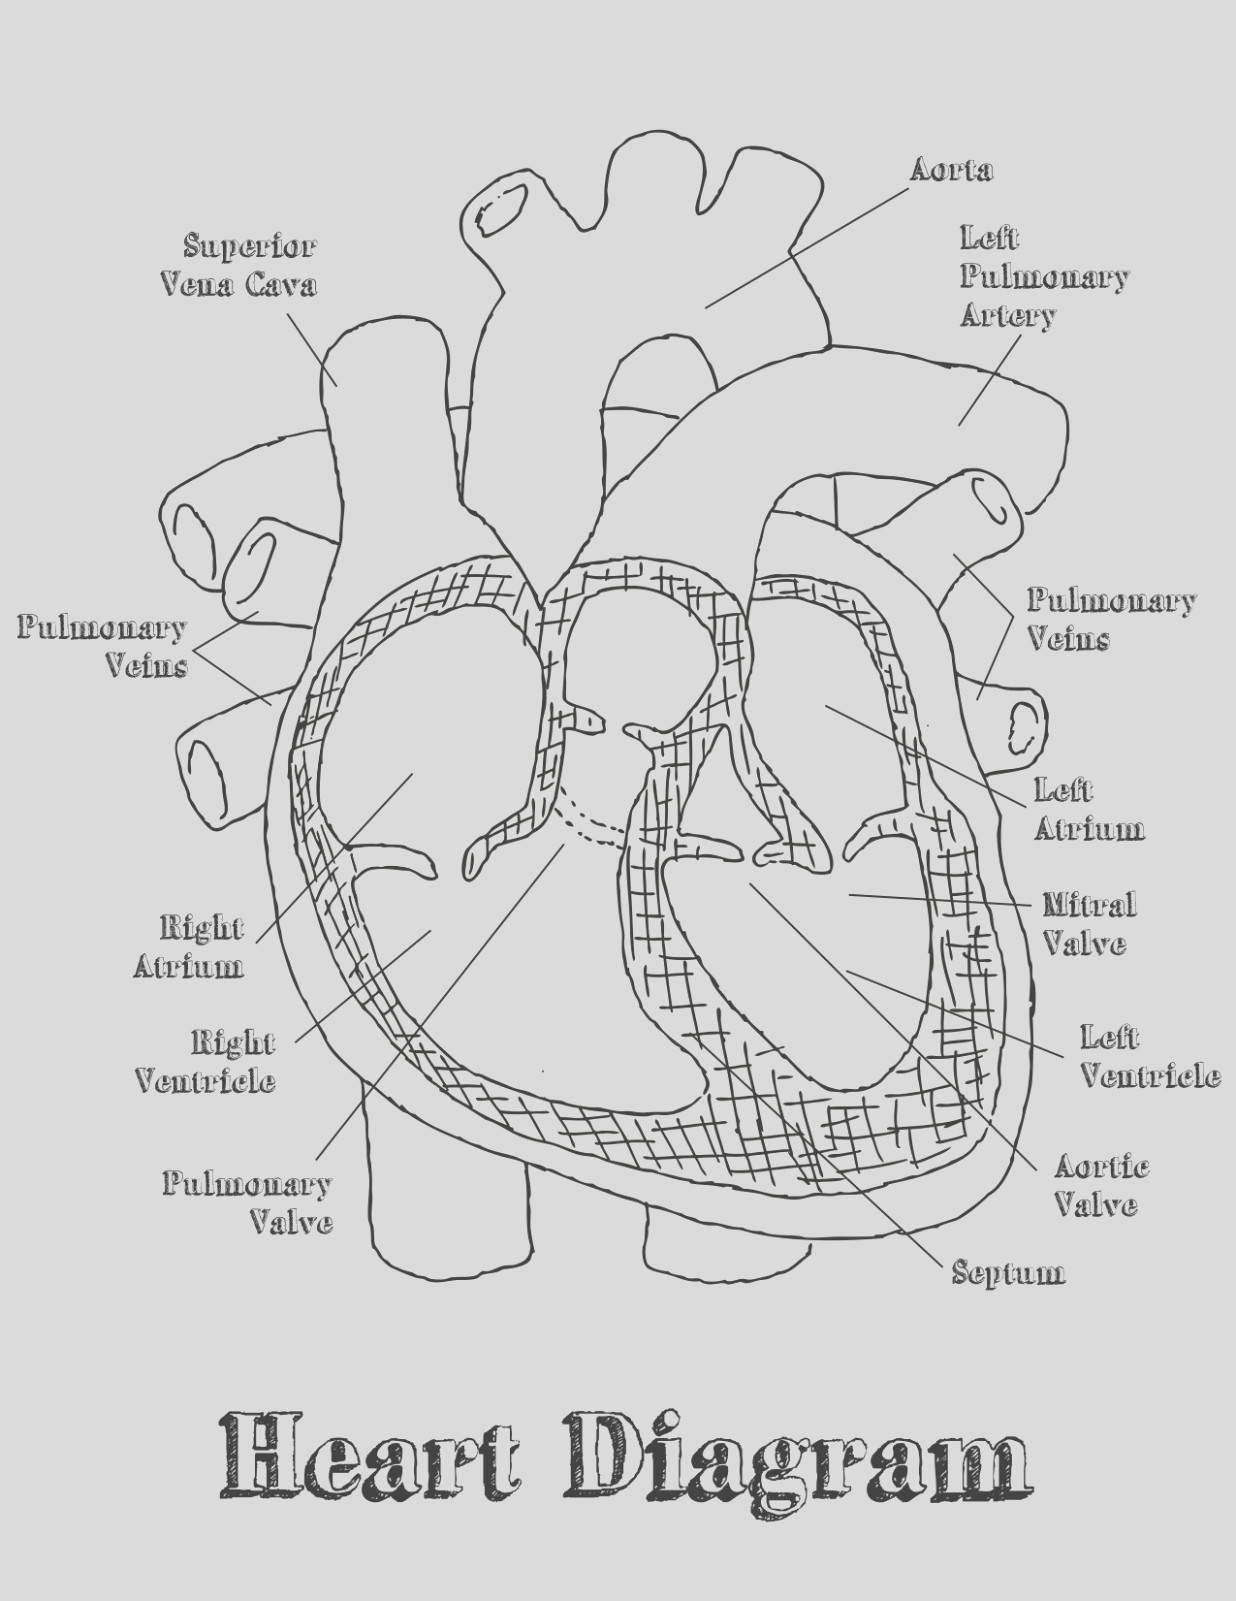 Heart Diagram Quiz Heart Diagram Labeled Worksheet Google Search Home School